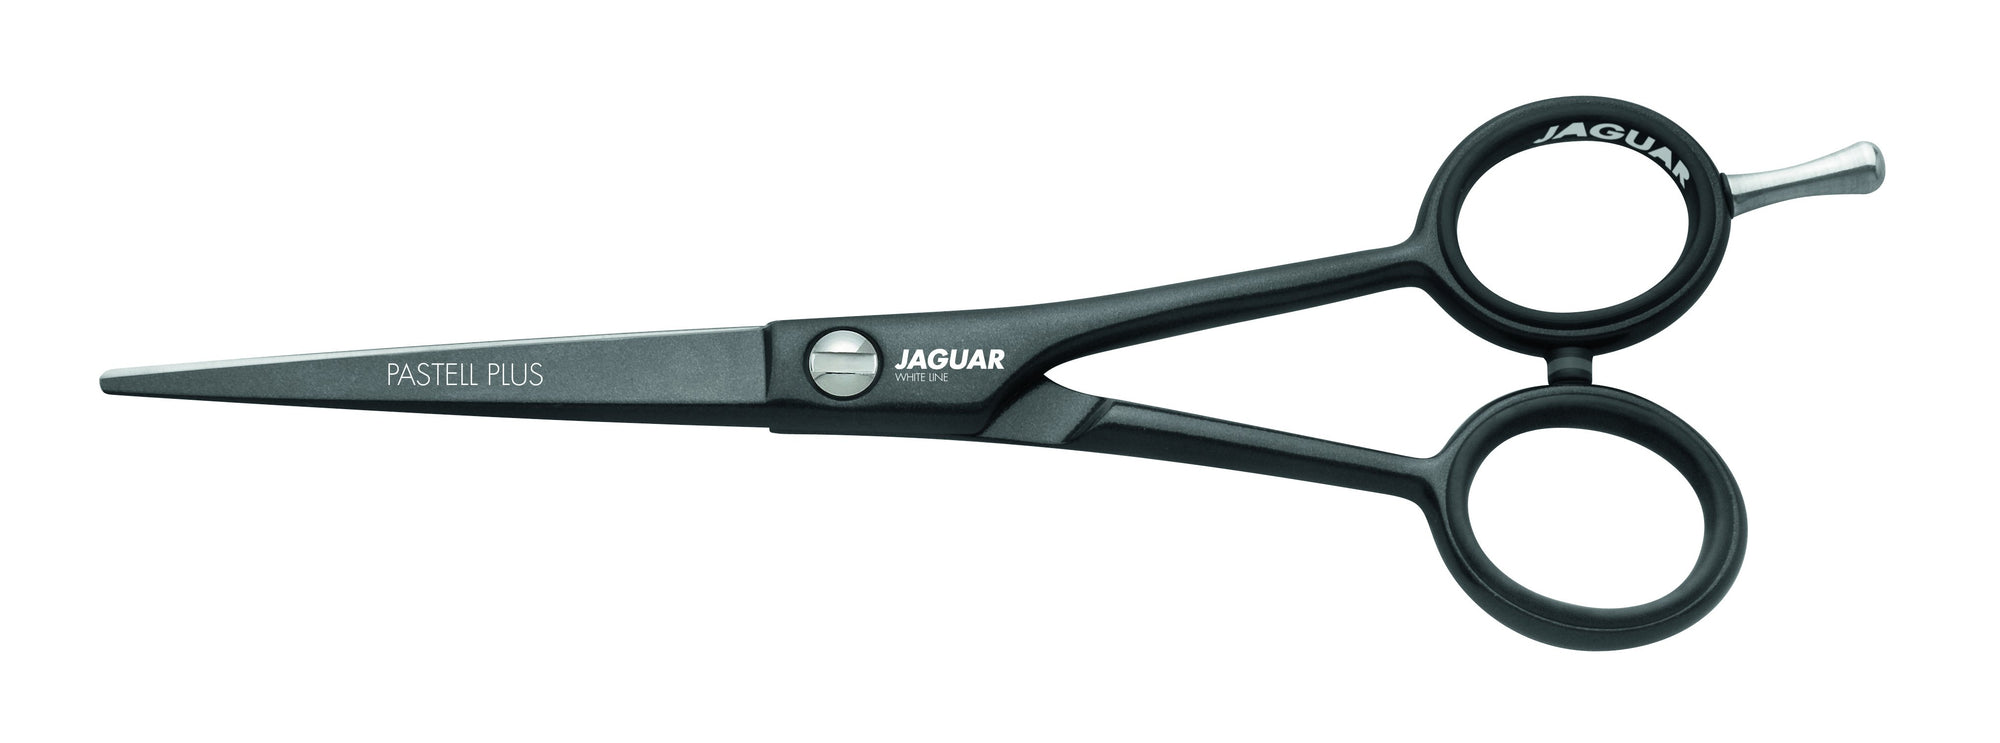 Jaguar Pastell Plus Lava (4397234749523)